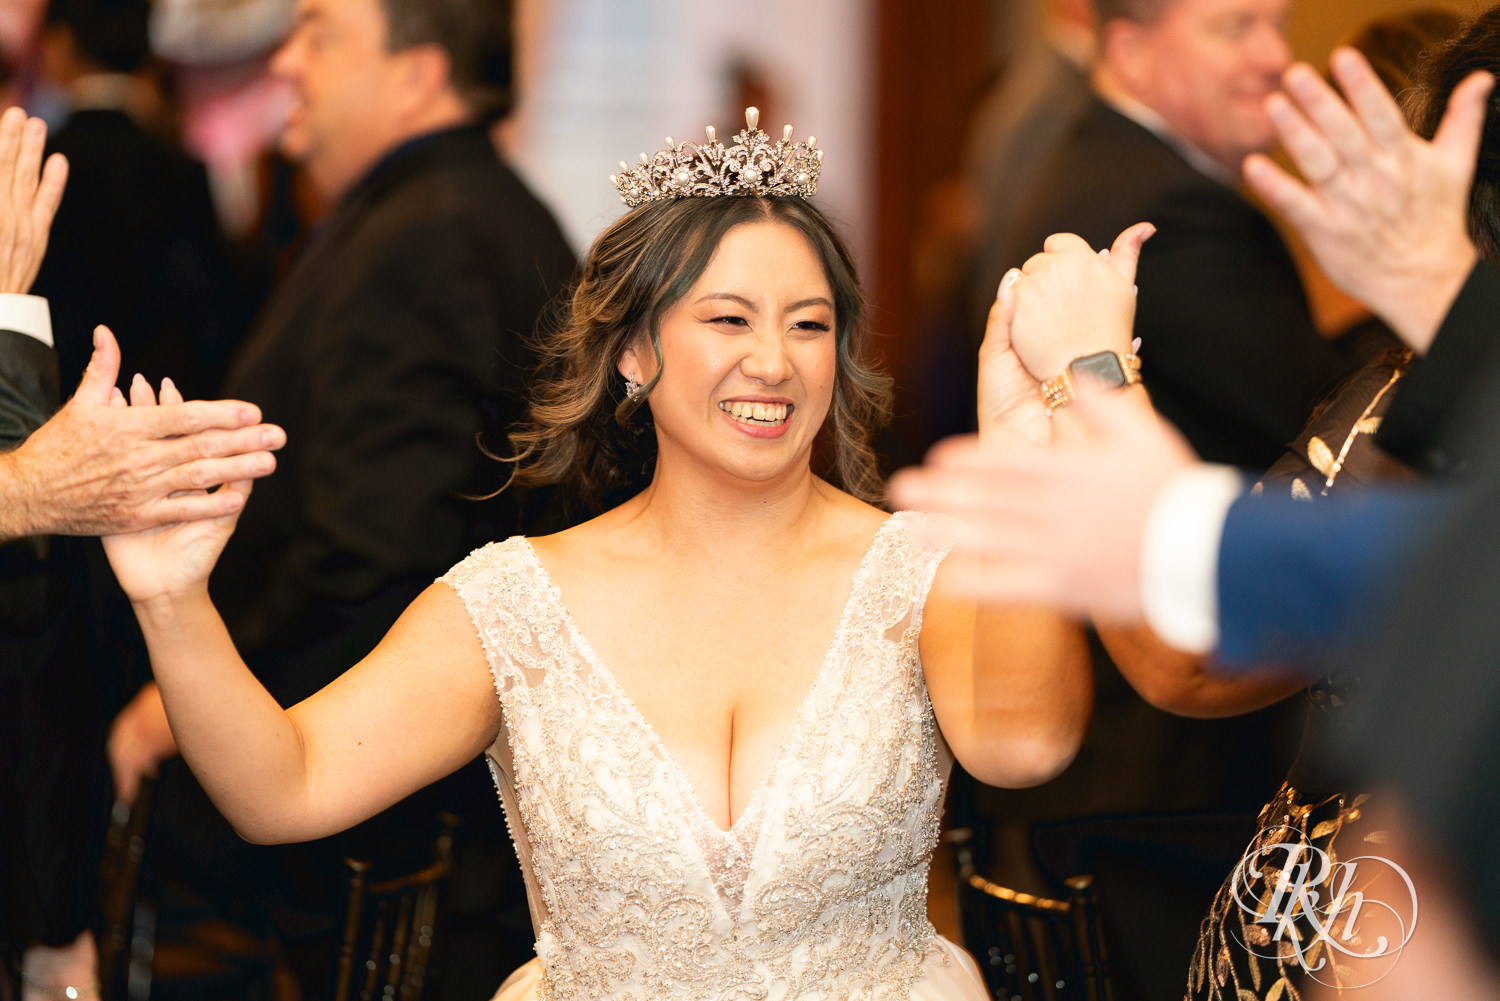 Hmong bride and groom enter wedding reception at the Saint Paul Athletic Club in Saint Paul, Minnesota.